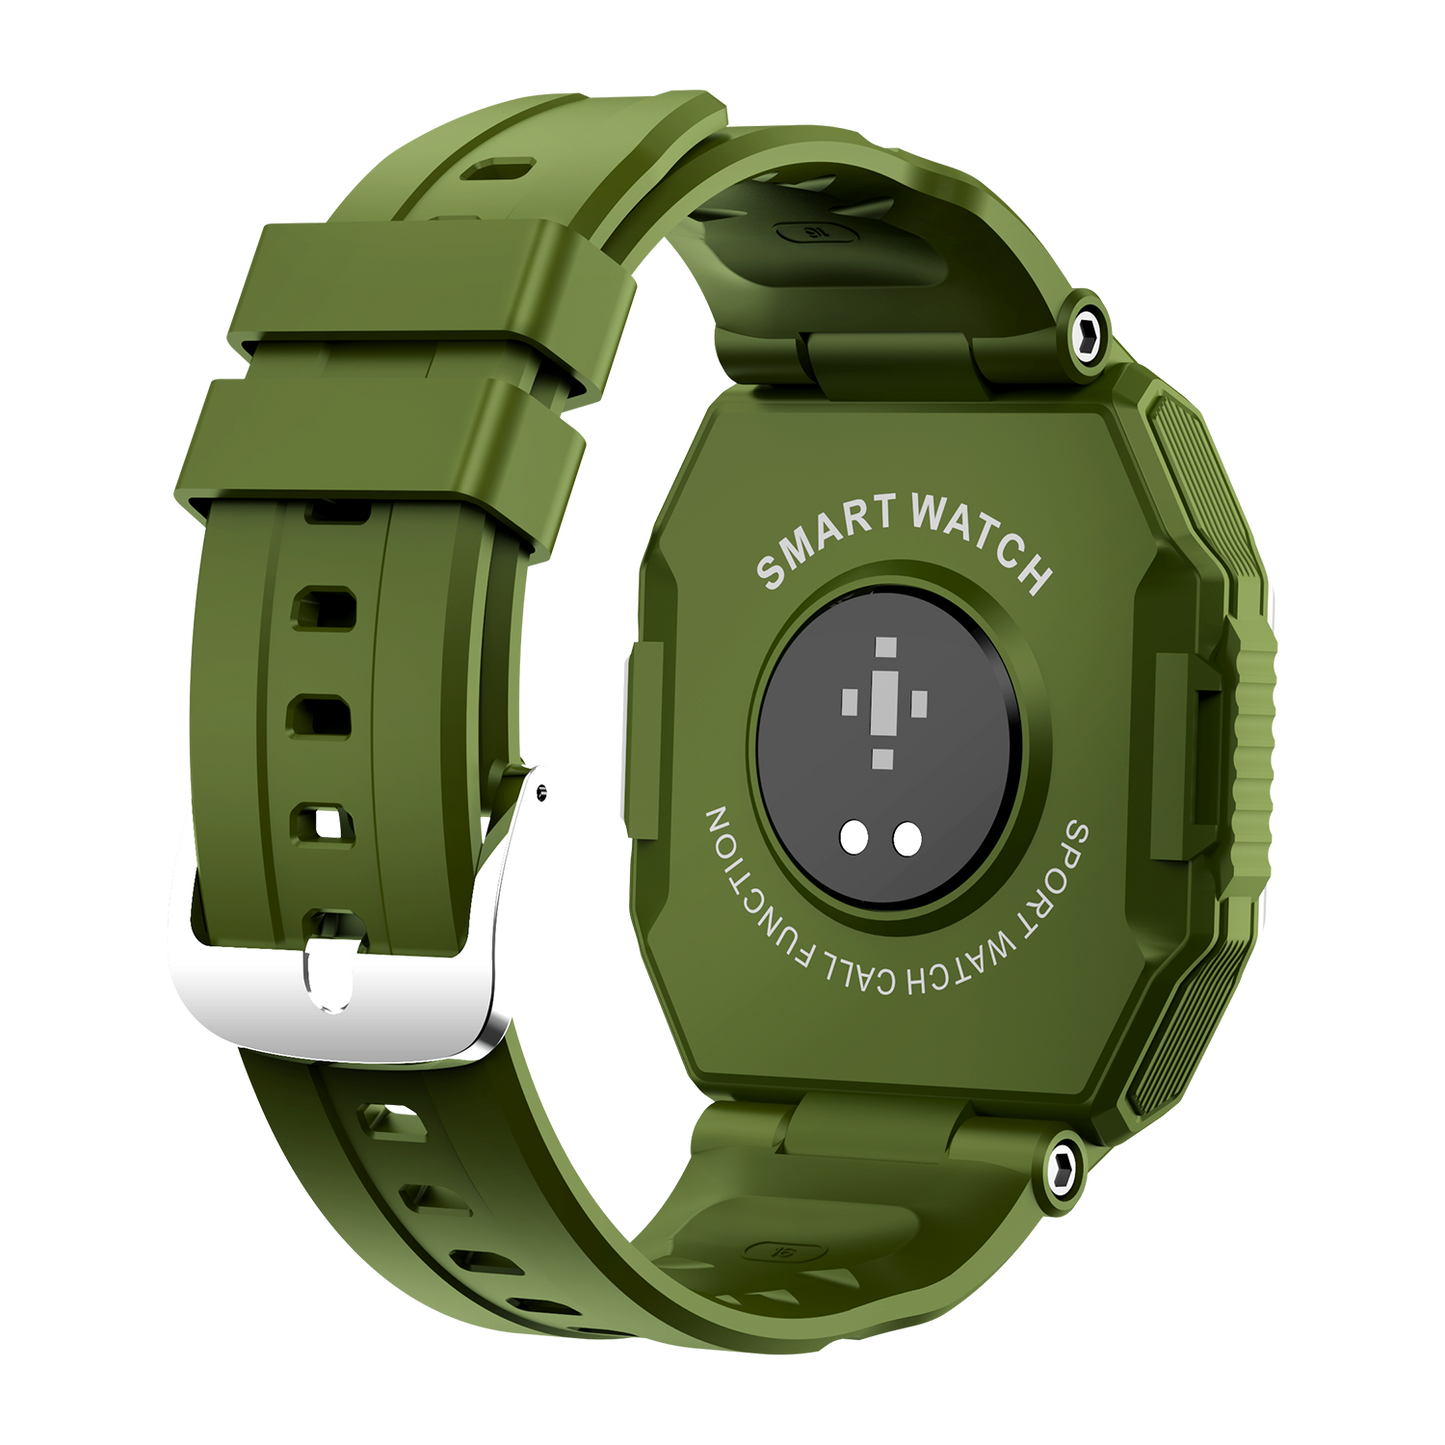 Outdoor Bluetooth Call Sports Watch Music Pedometer Heart Rate Blood Pressure Blood Oxygen Health Waterproof Smart Bracelet